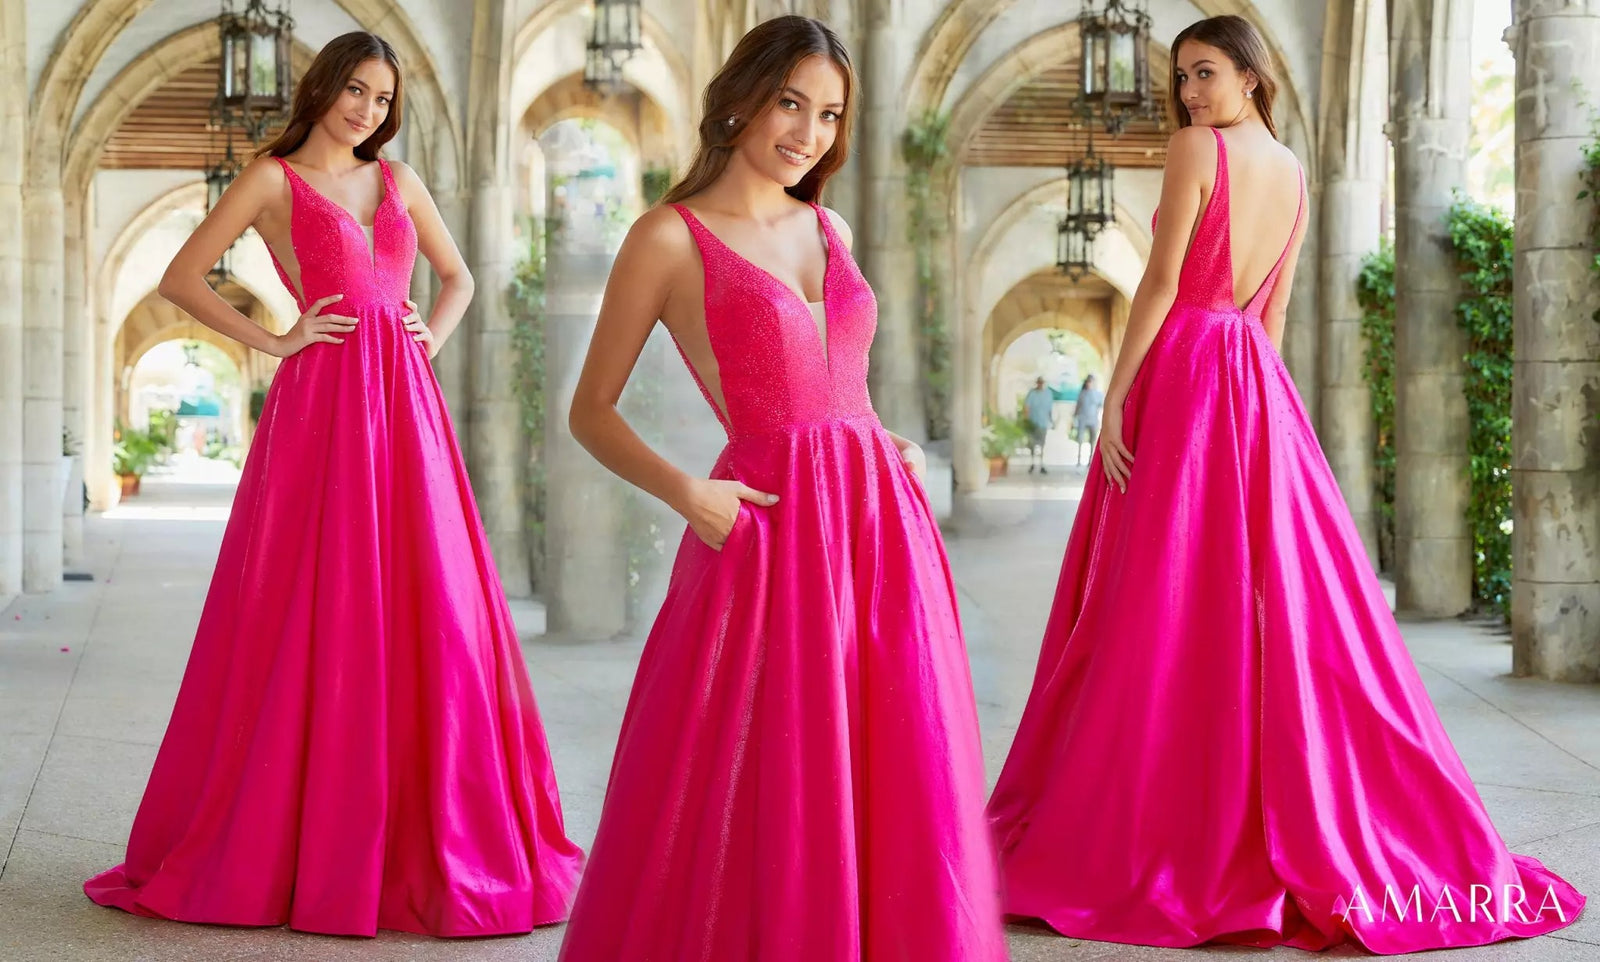 world best designer ball gown collection 2022 || Designer gown ||wedding  gown collection#gown - YouTube